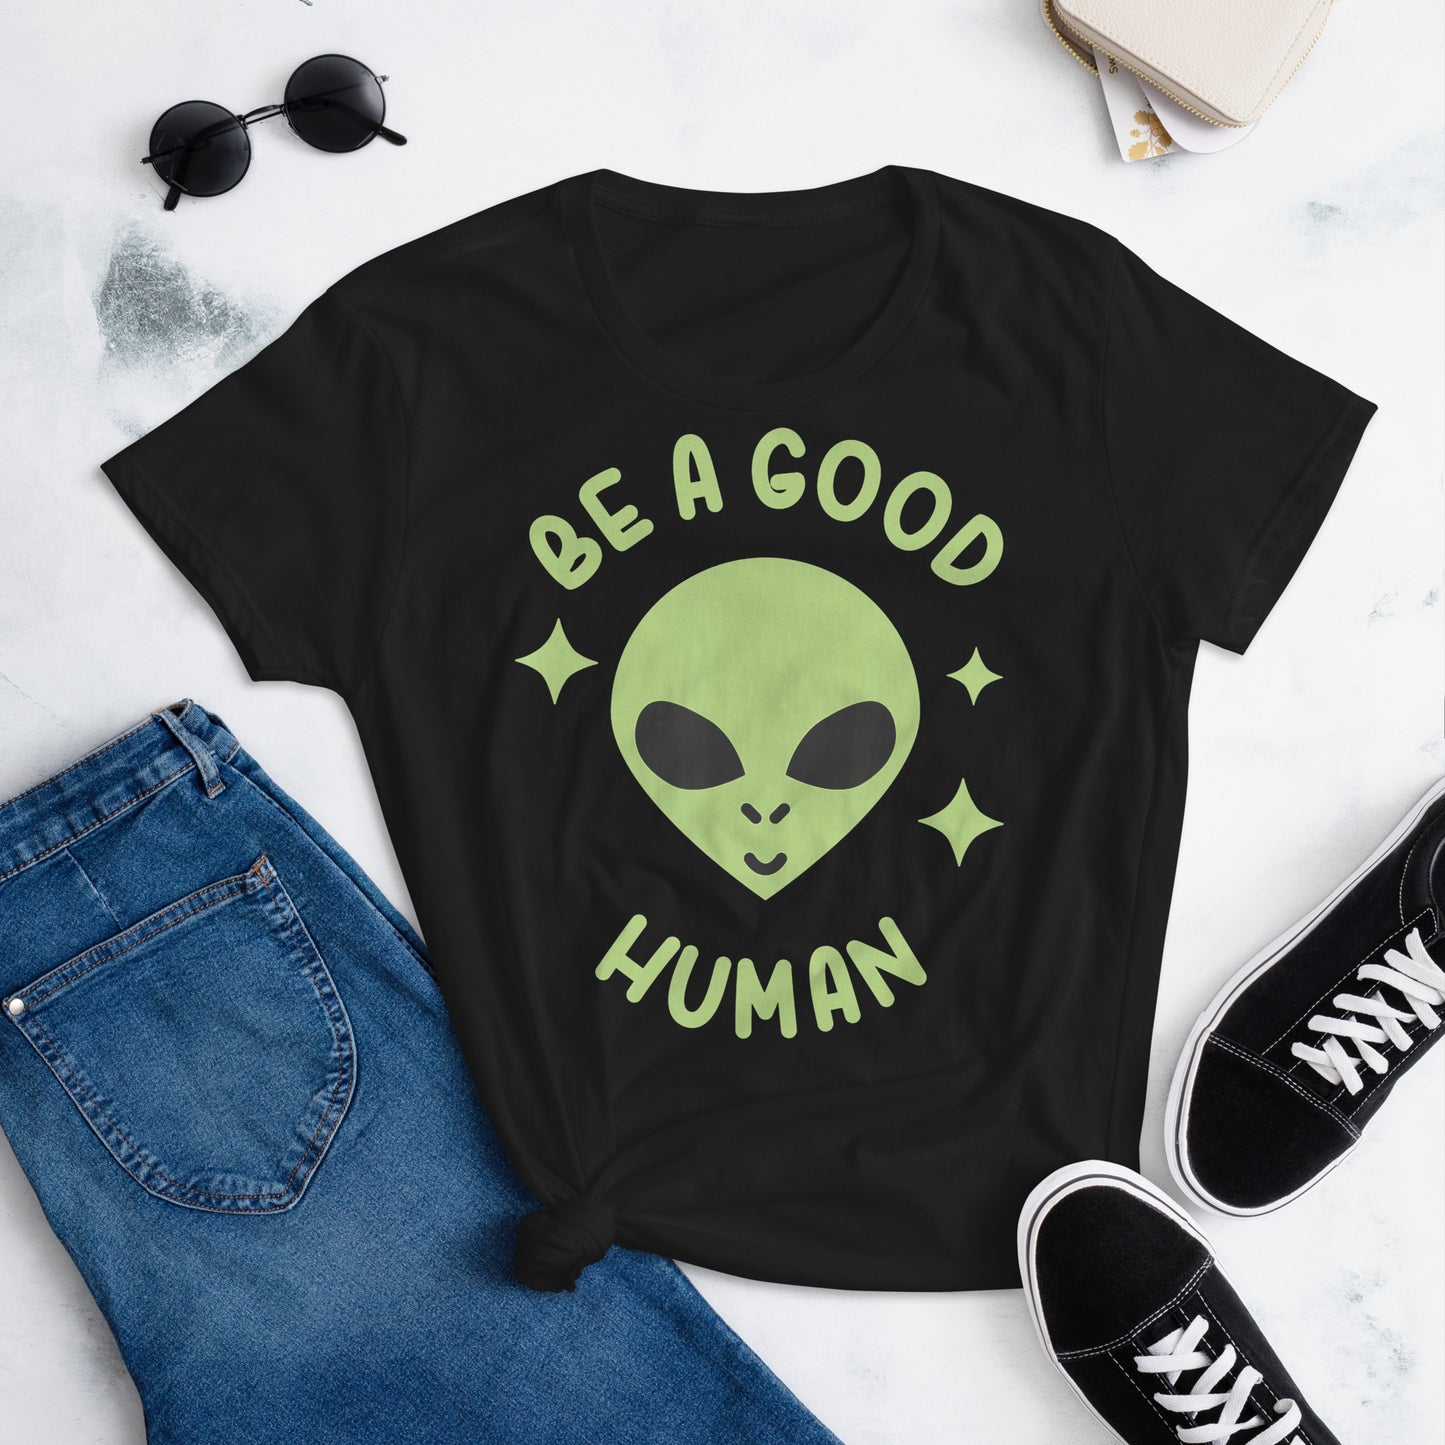 Be a good Human - Women's T-Shirt | TheShirtfather